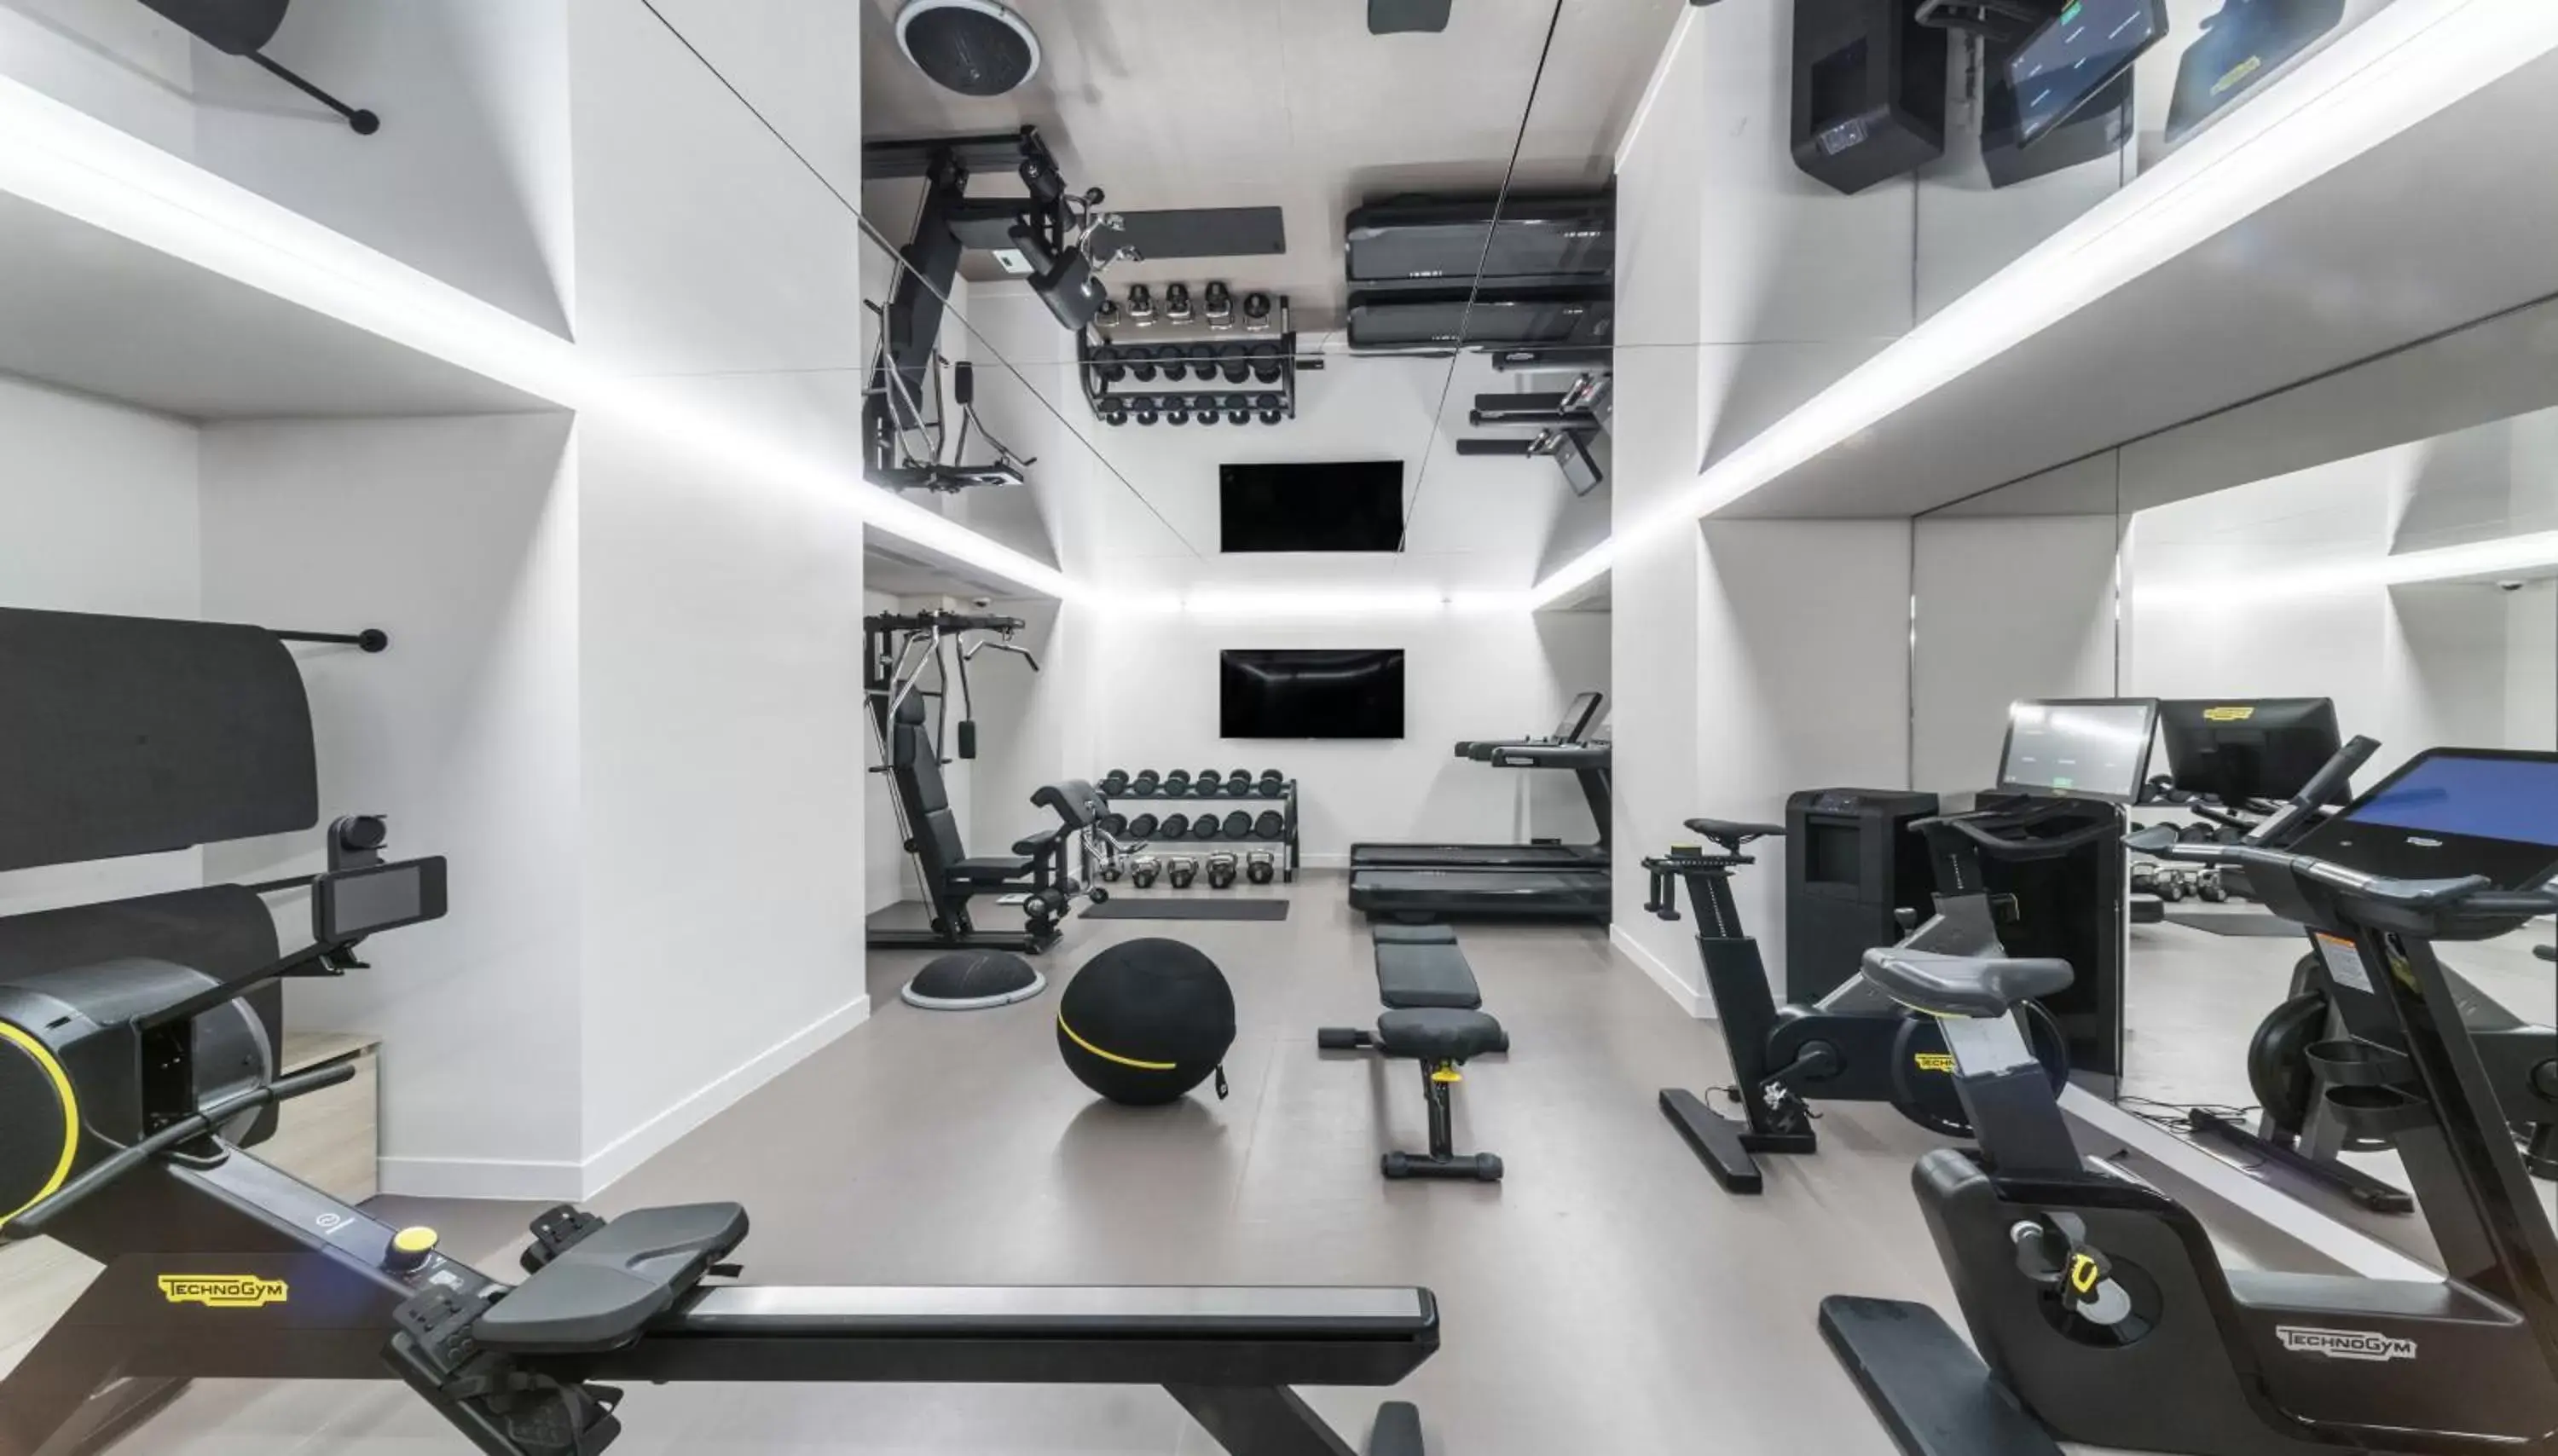 Fitness centre/facilities, Fitness Center/Facilities in Kimpton - St Honoré Paris, an IHG Hotel